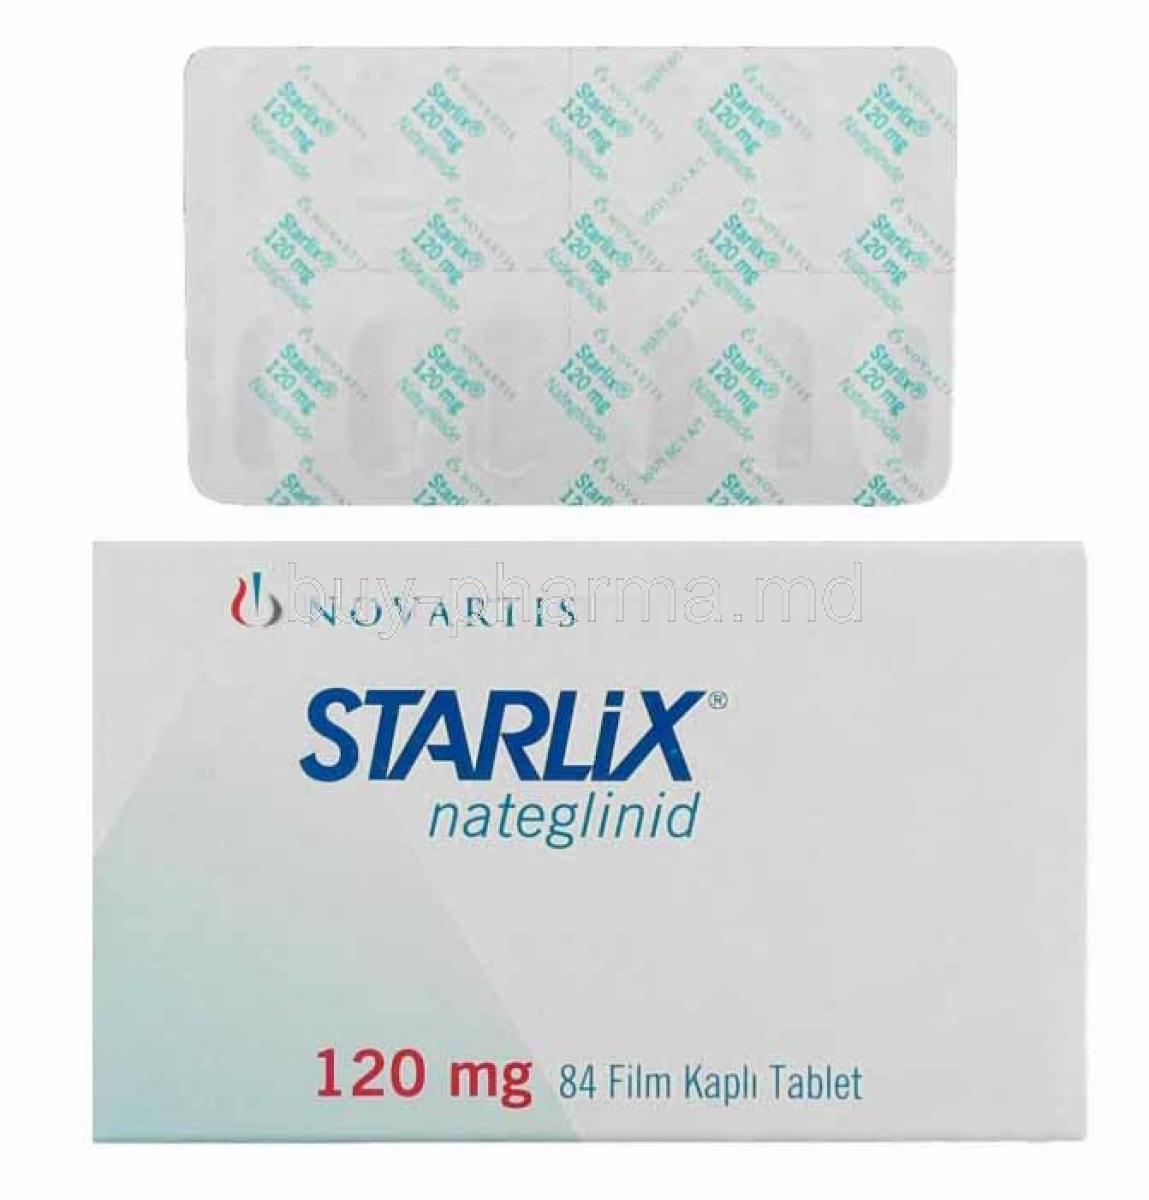 7575-Starlix-Nateglinide-Box-And-Tablets.jpg